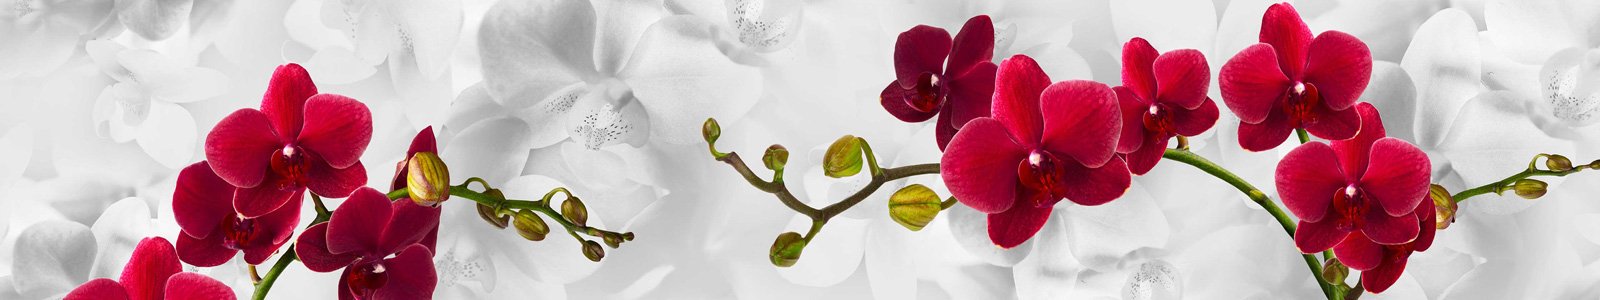 №7239 - Орхидеи цвета кардинал на светло-сером фоне